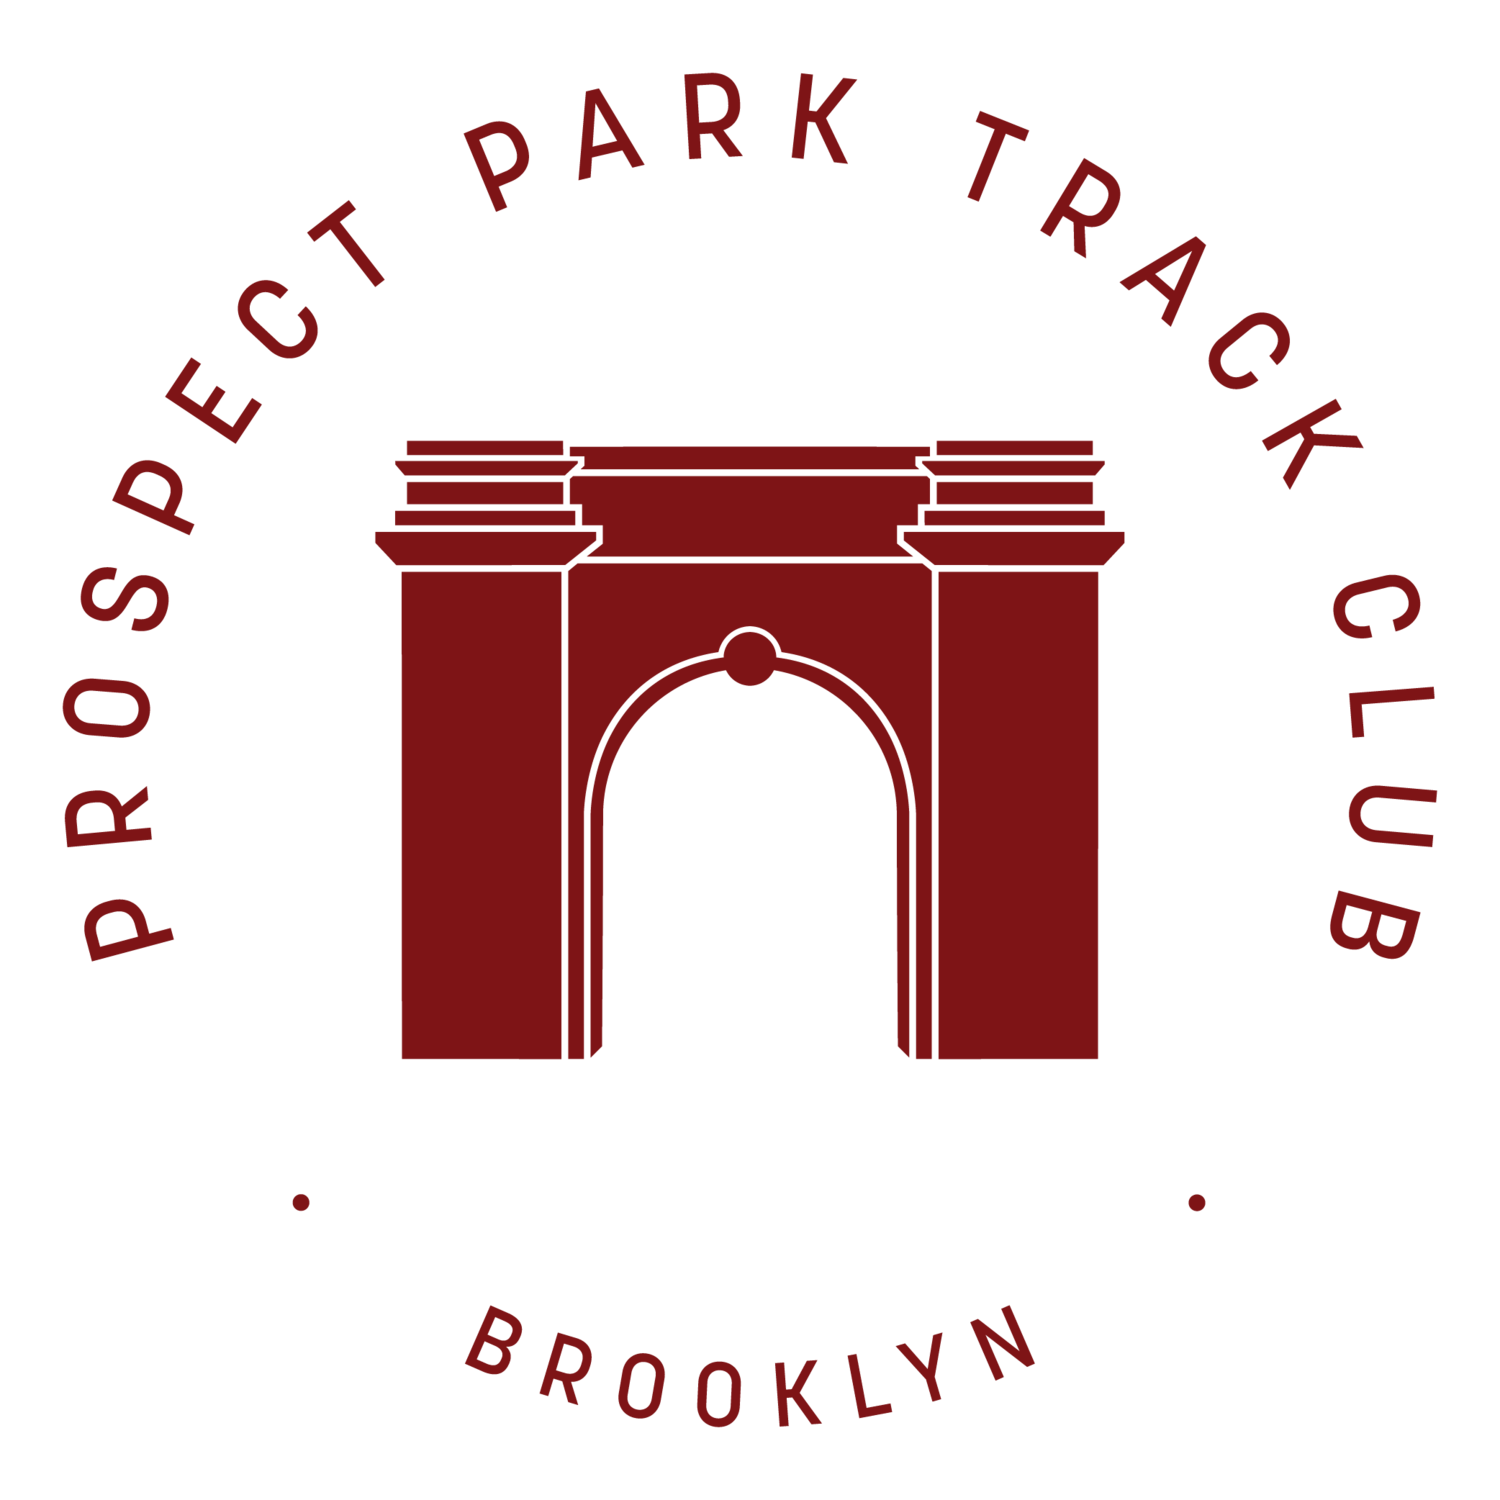 Prospect Park Track Club